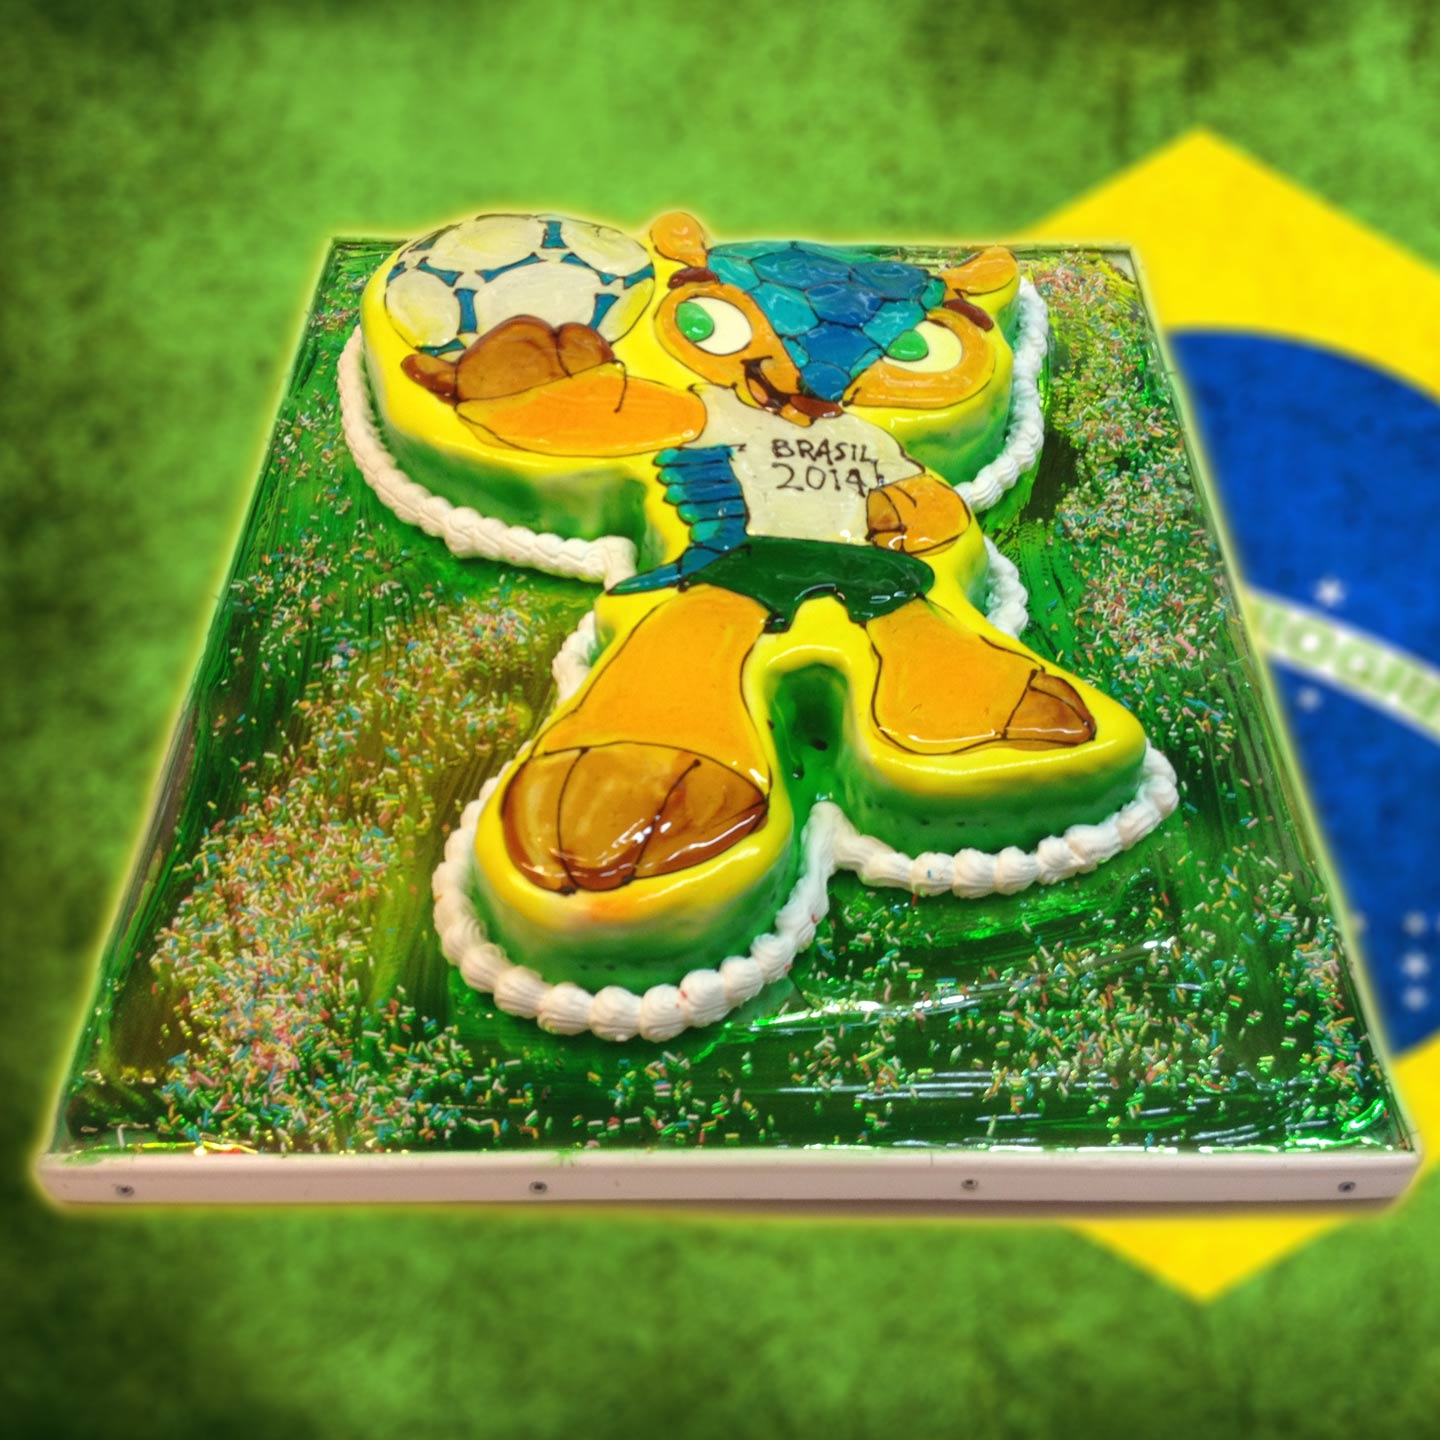 Brasil World Cup